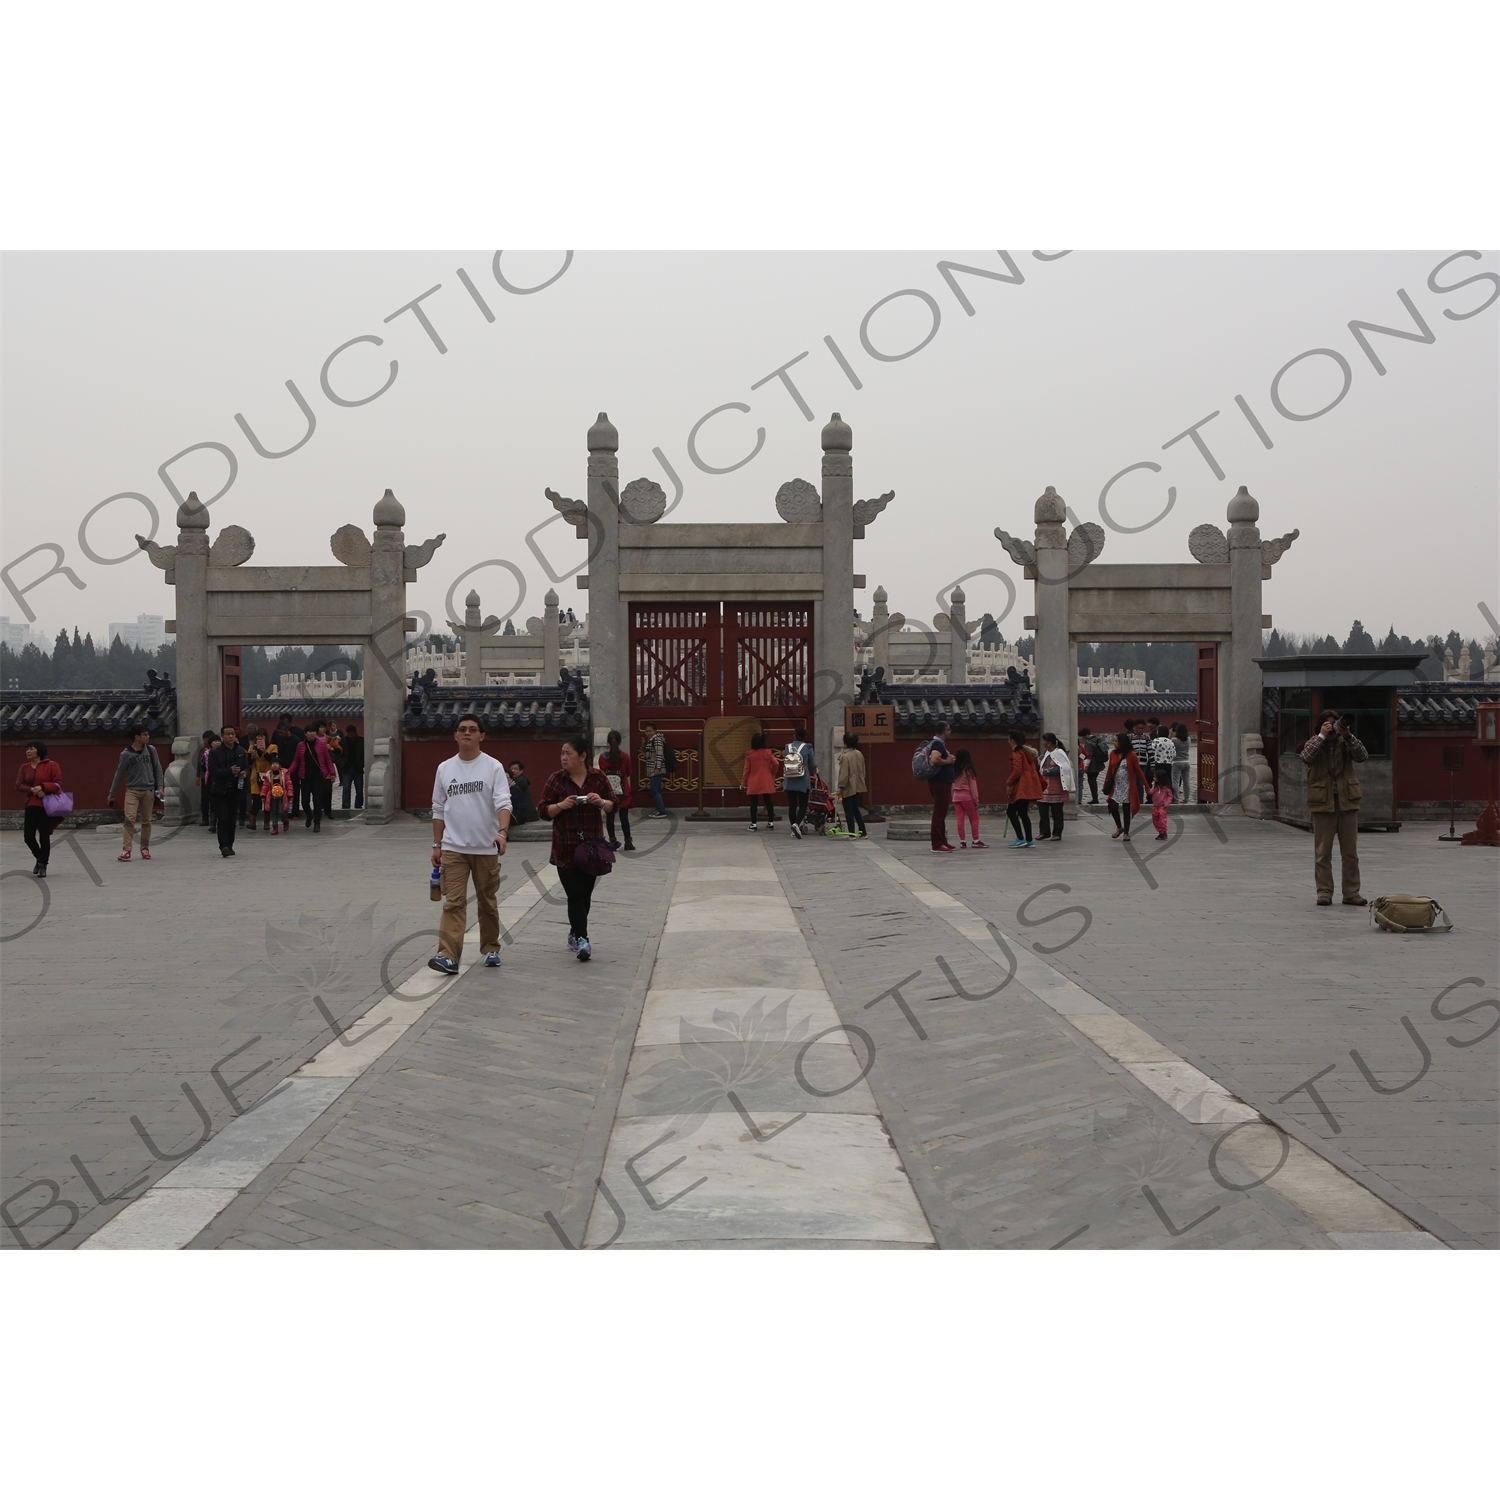 North Gate of the Circular Mound Altar (Yuanqiu Tan) in the Temple of Heaven (Tiantan) in Beijing